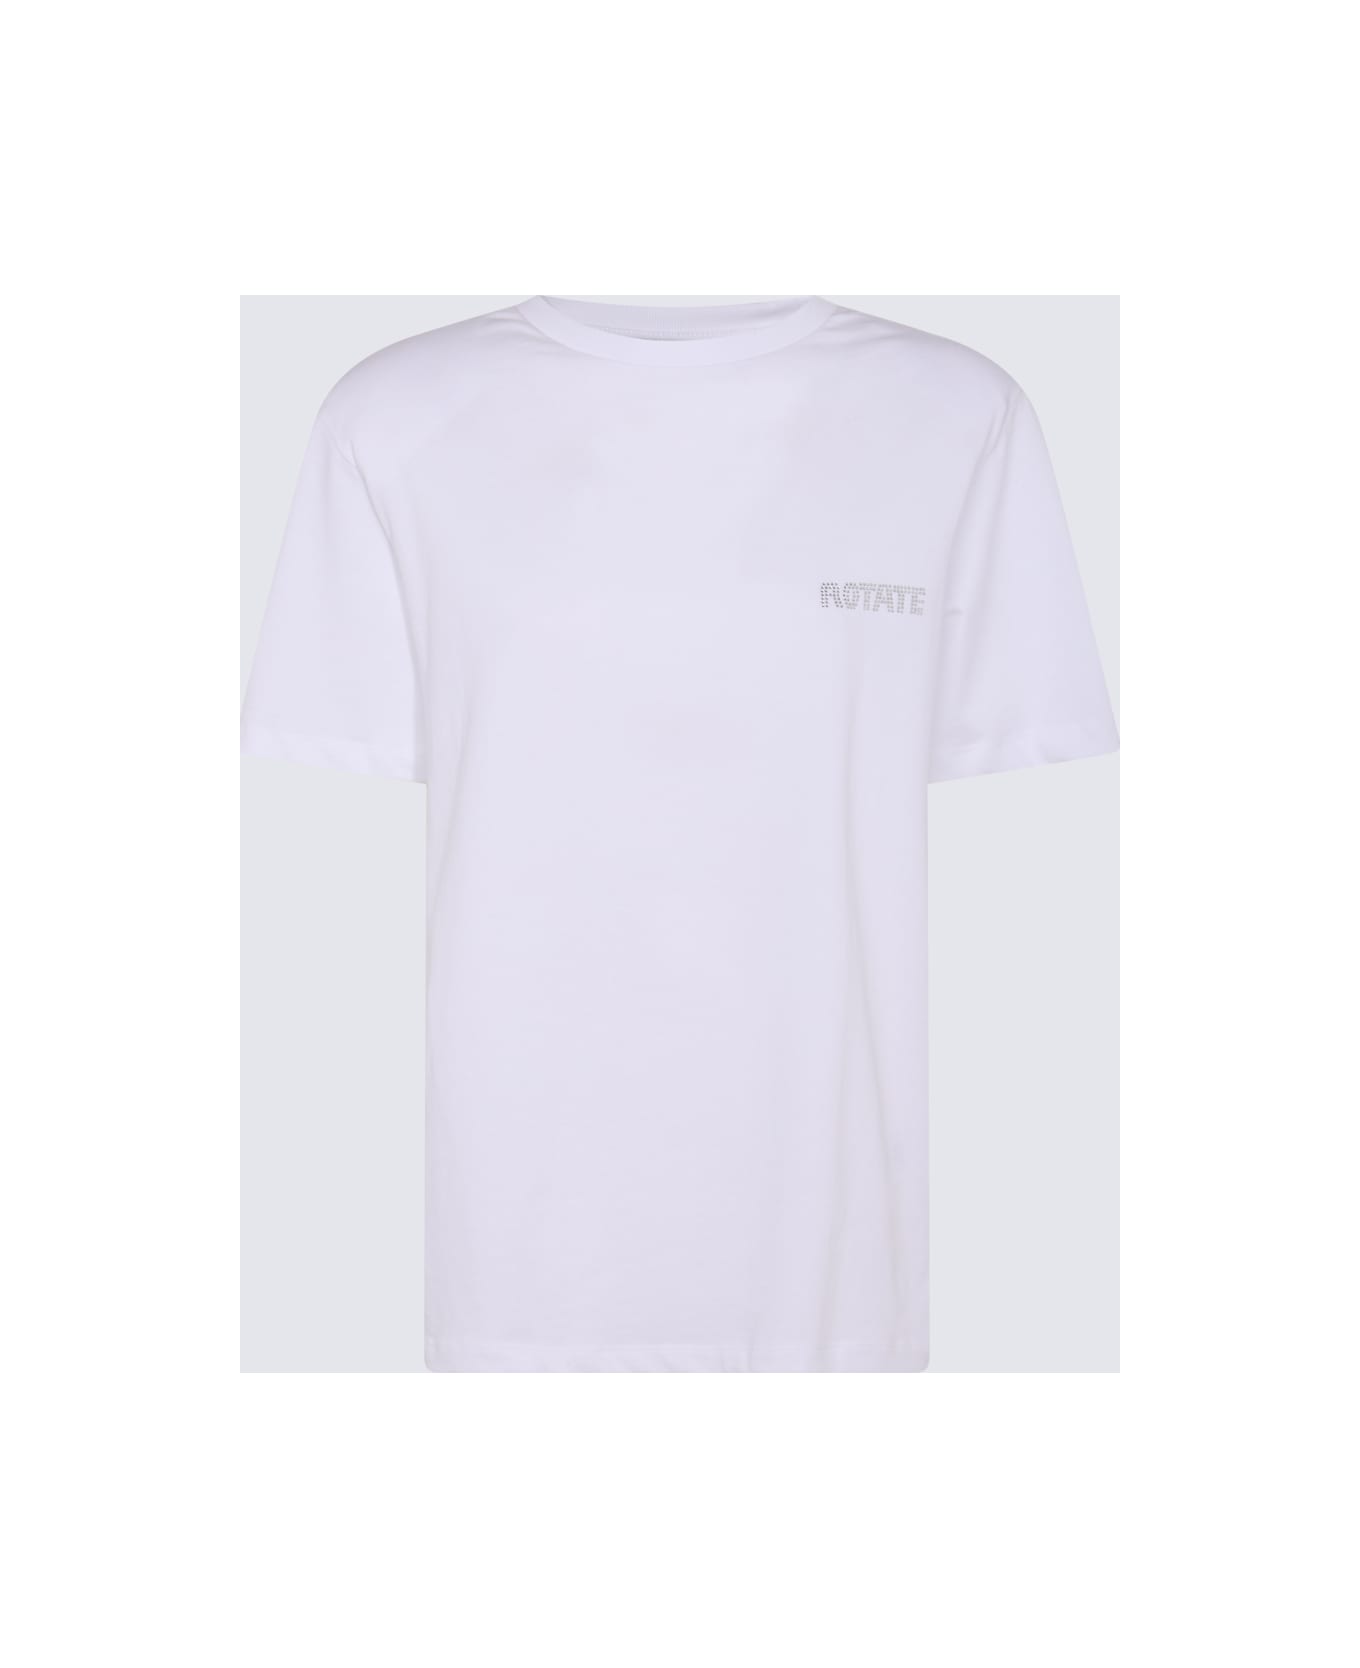 Rotate by Birger Christensen White Cotton T-shirt - White Tシャツ